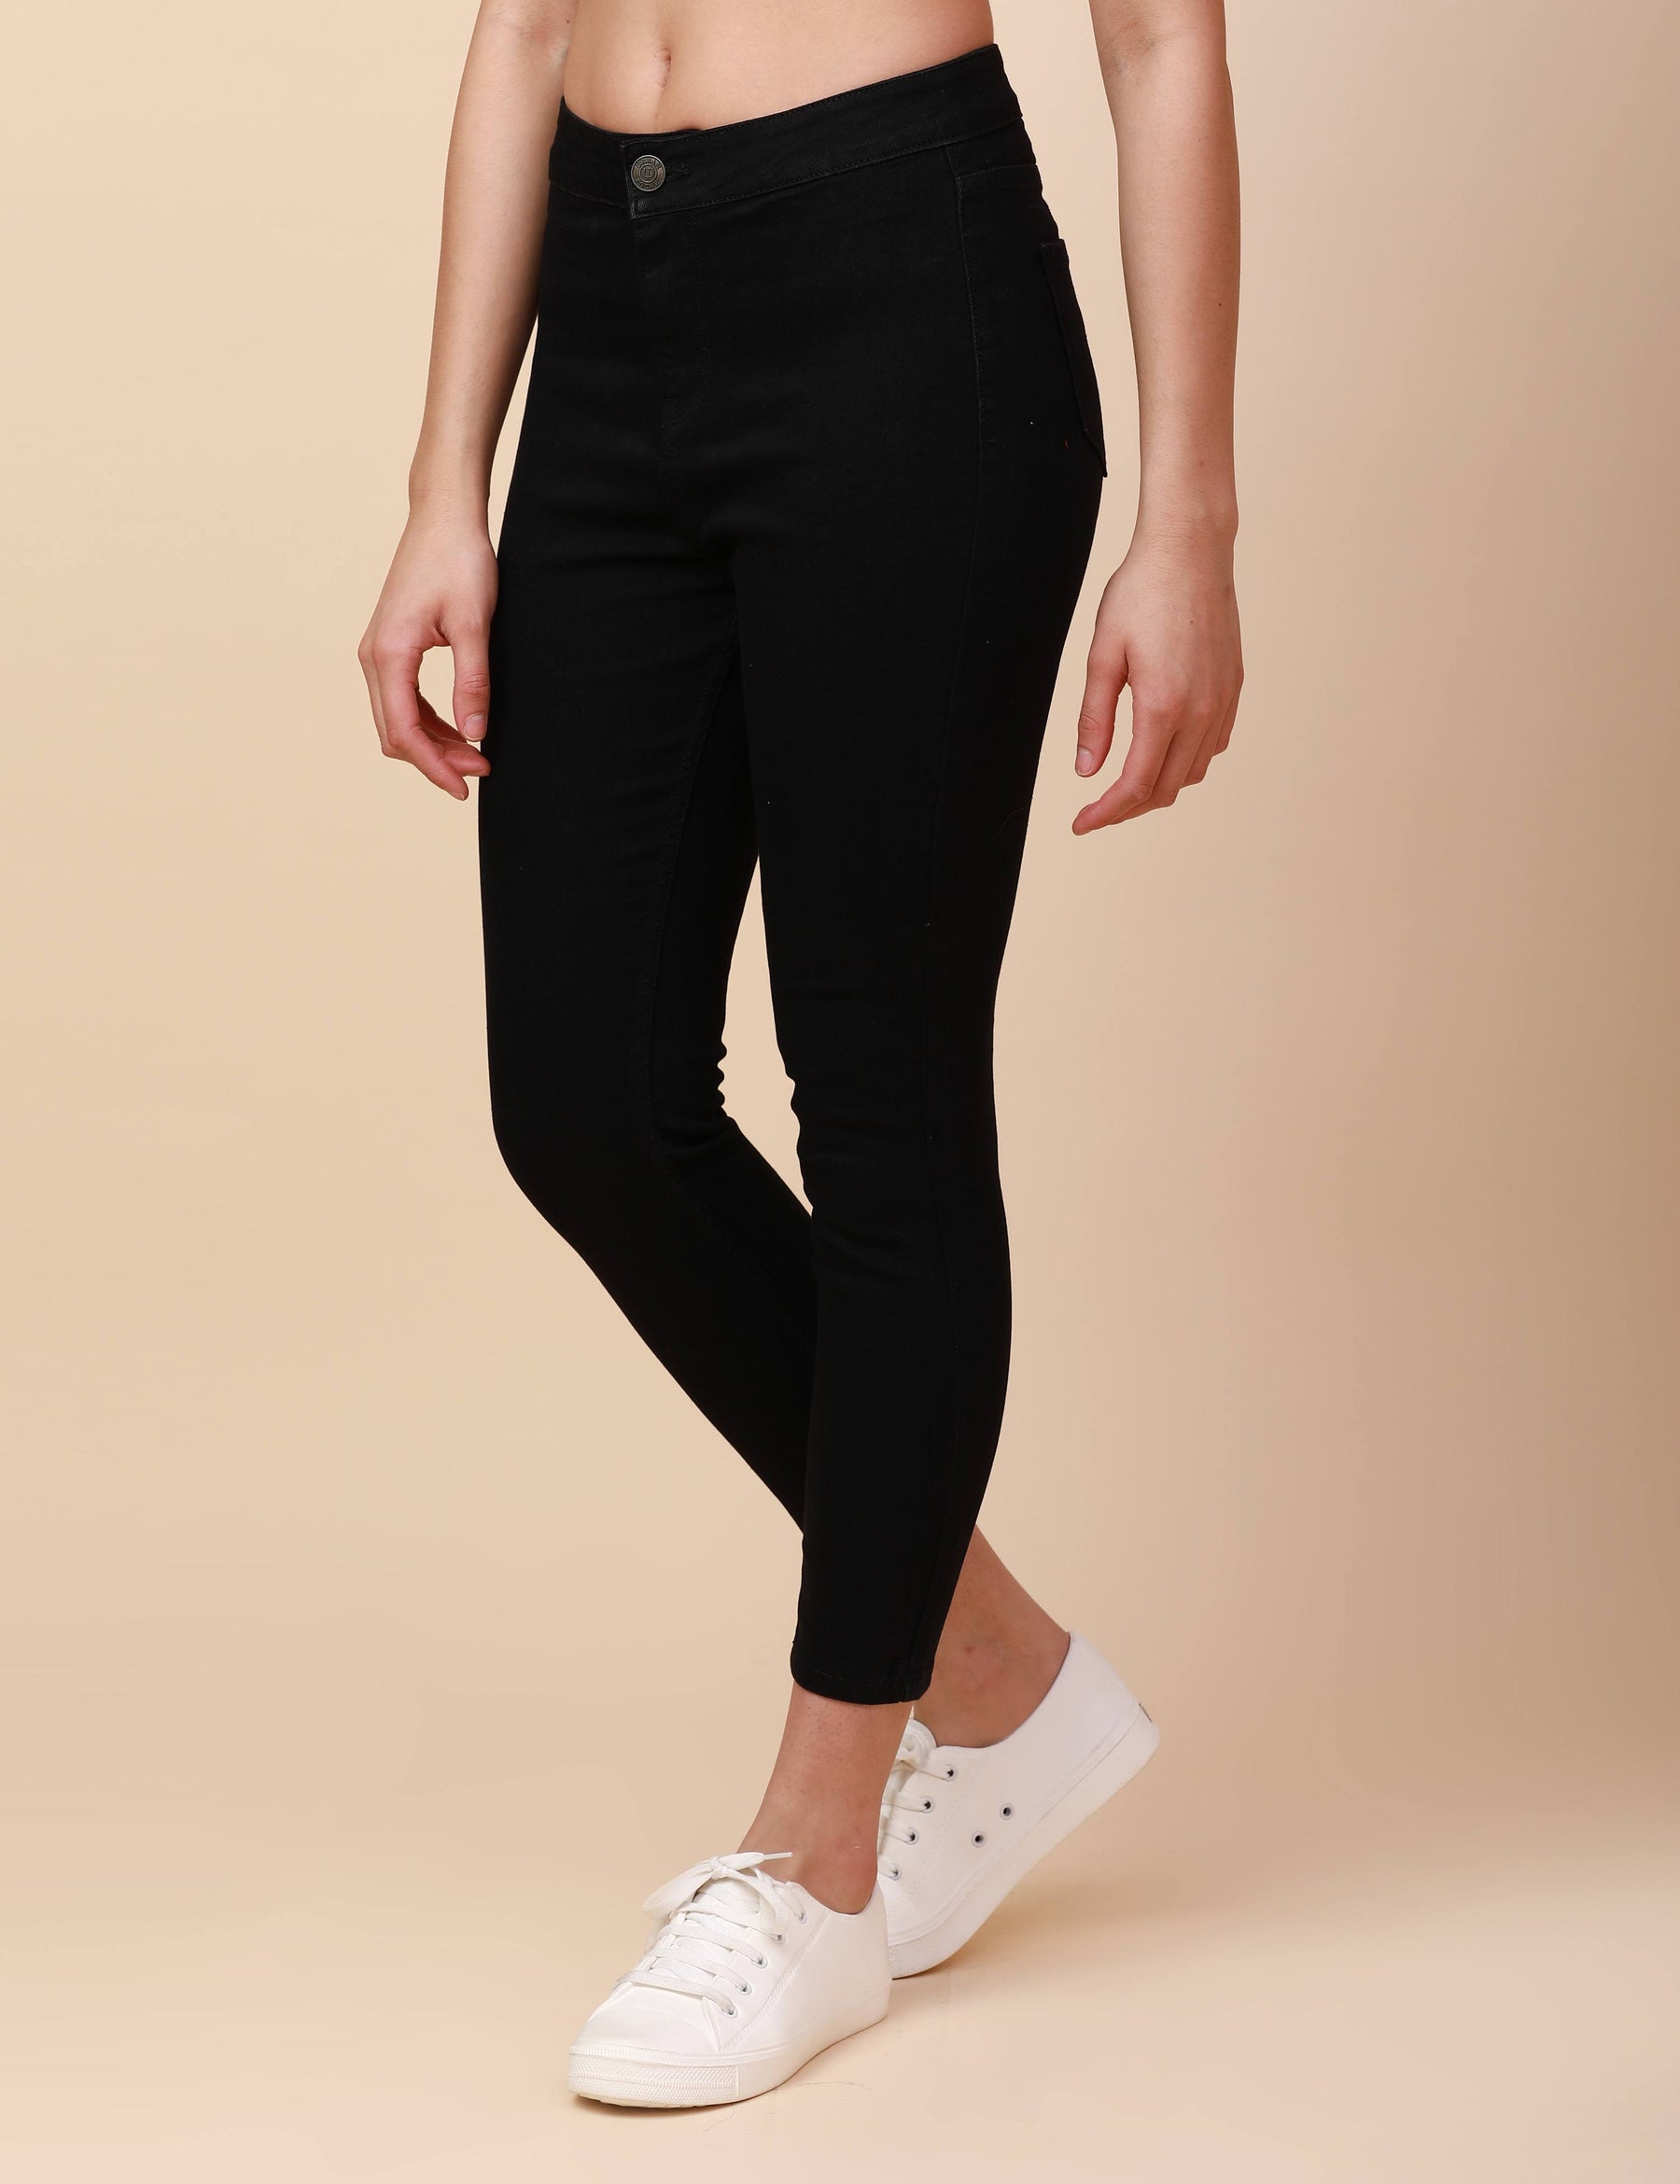 Women's Trousre Pant Ankle Length Slim Fit Pants For Office Casual & Formal  Wear | eBay